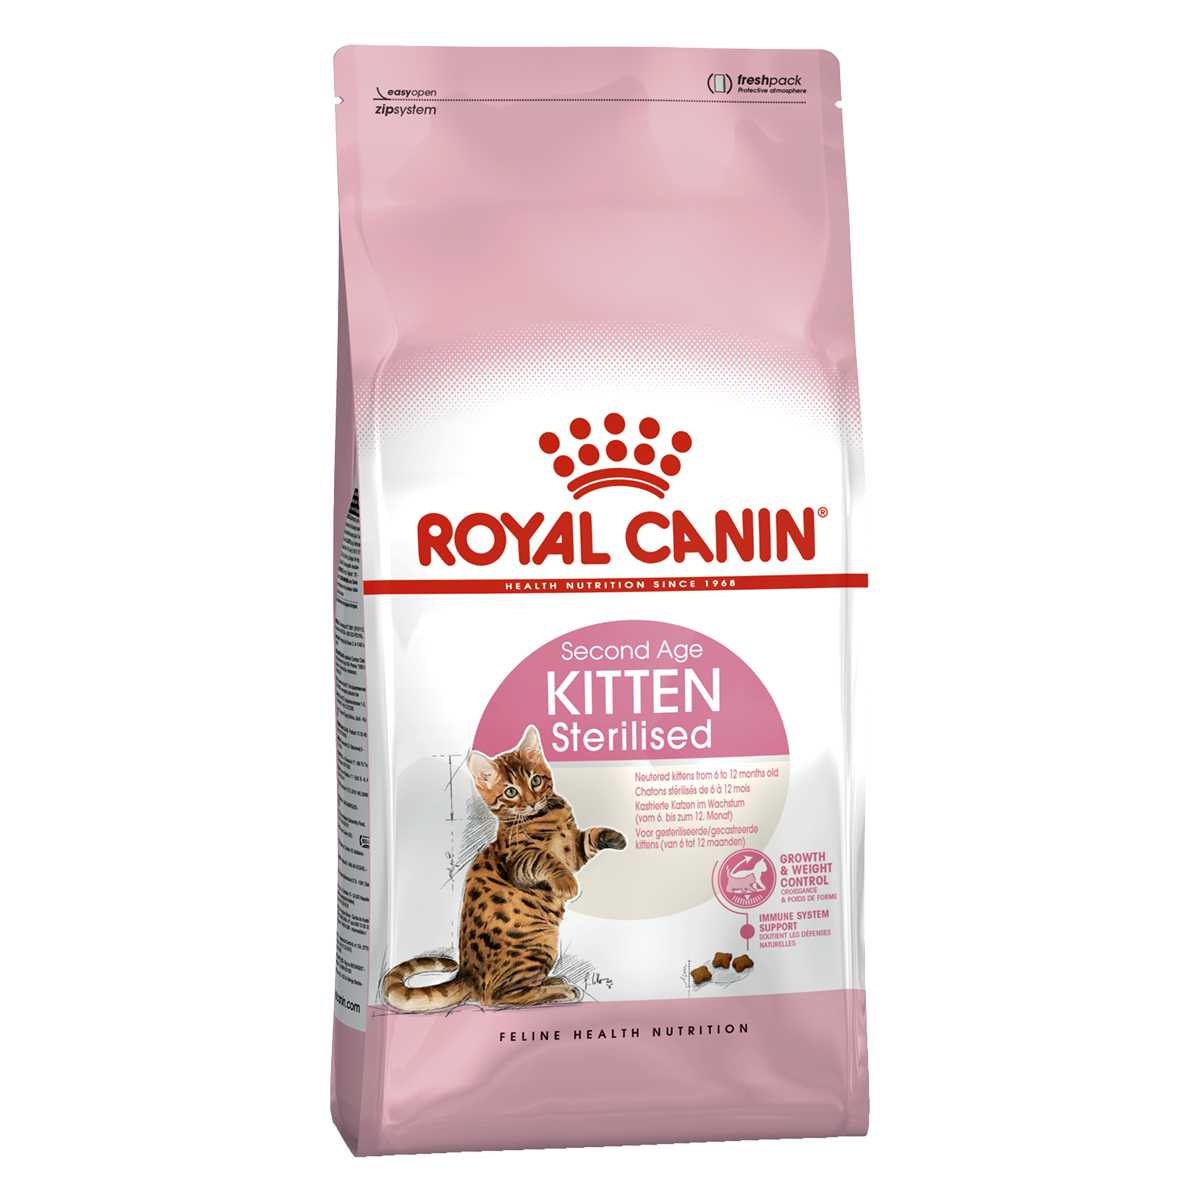 Royal Canin Kitten Sterilised, 400 г - корм Роял Канин для стерилизованных котят